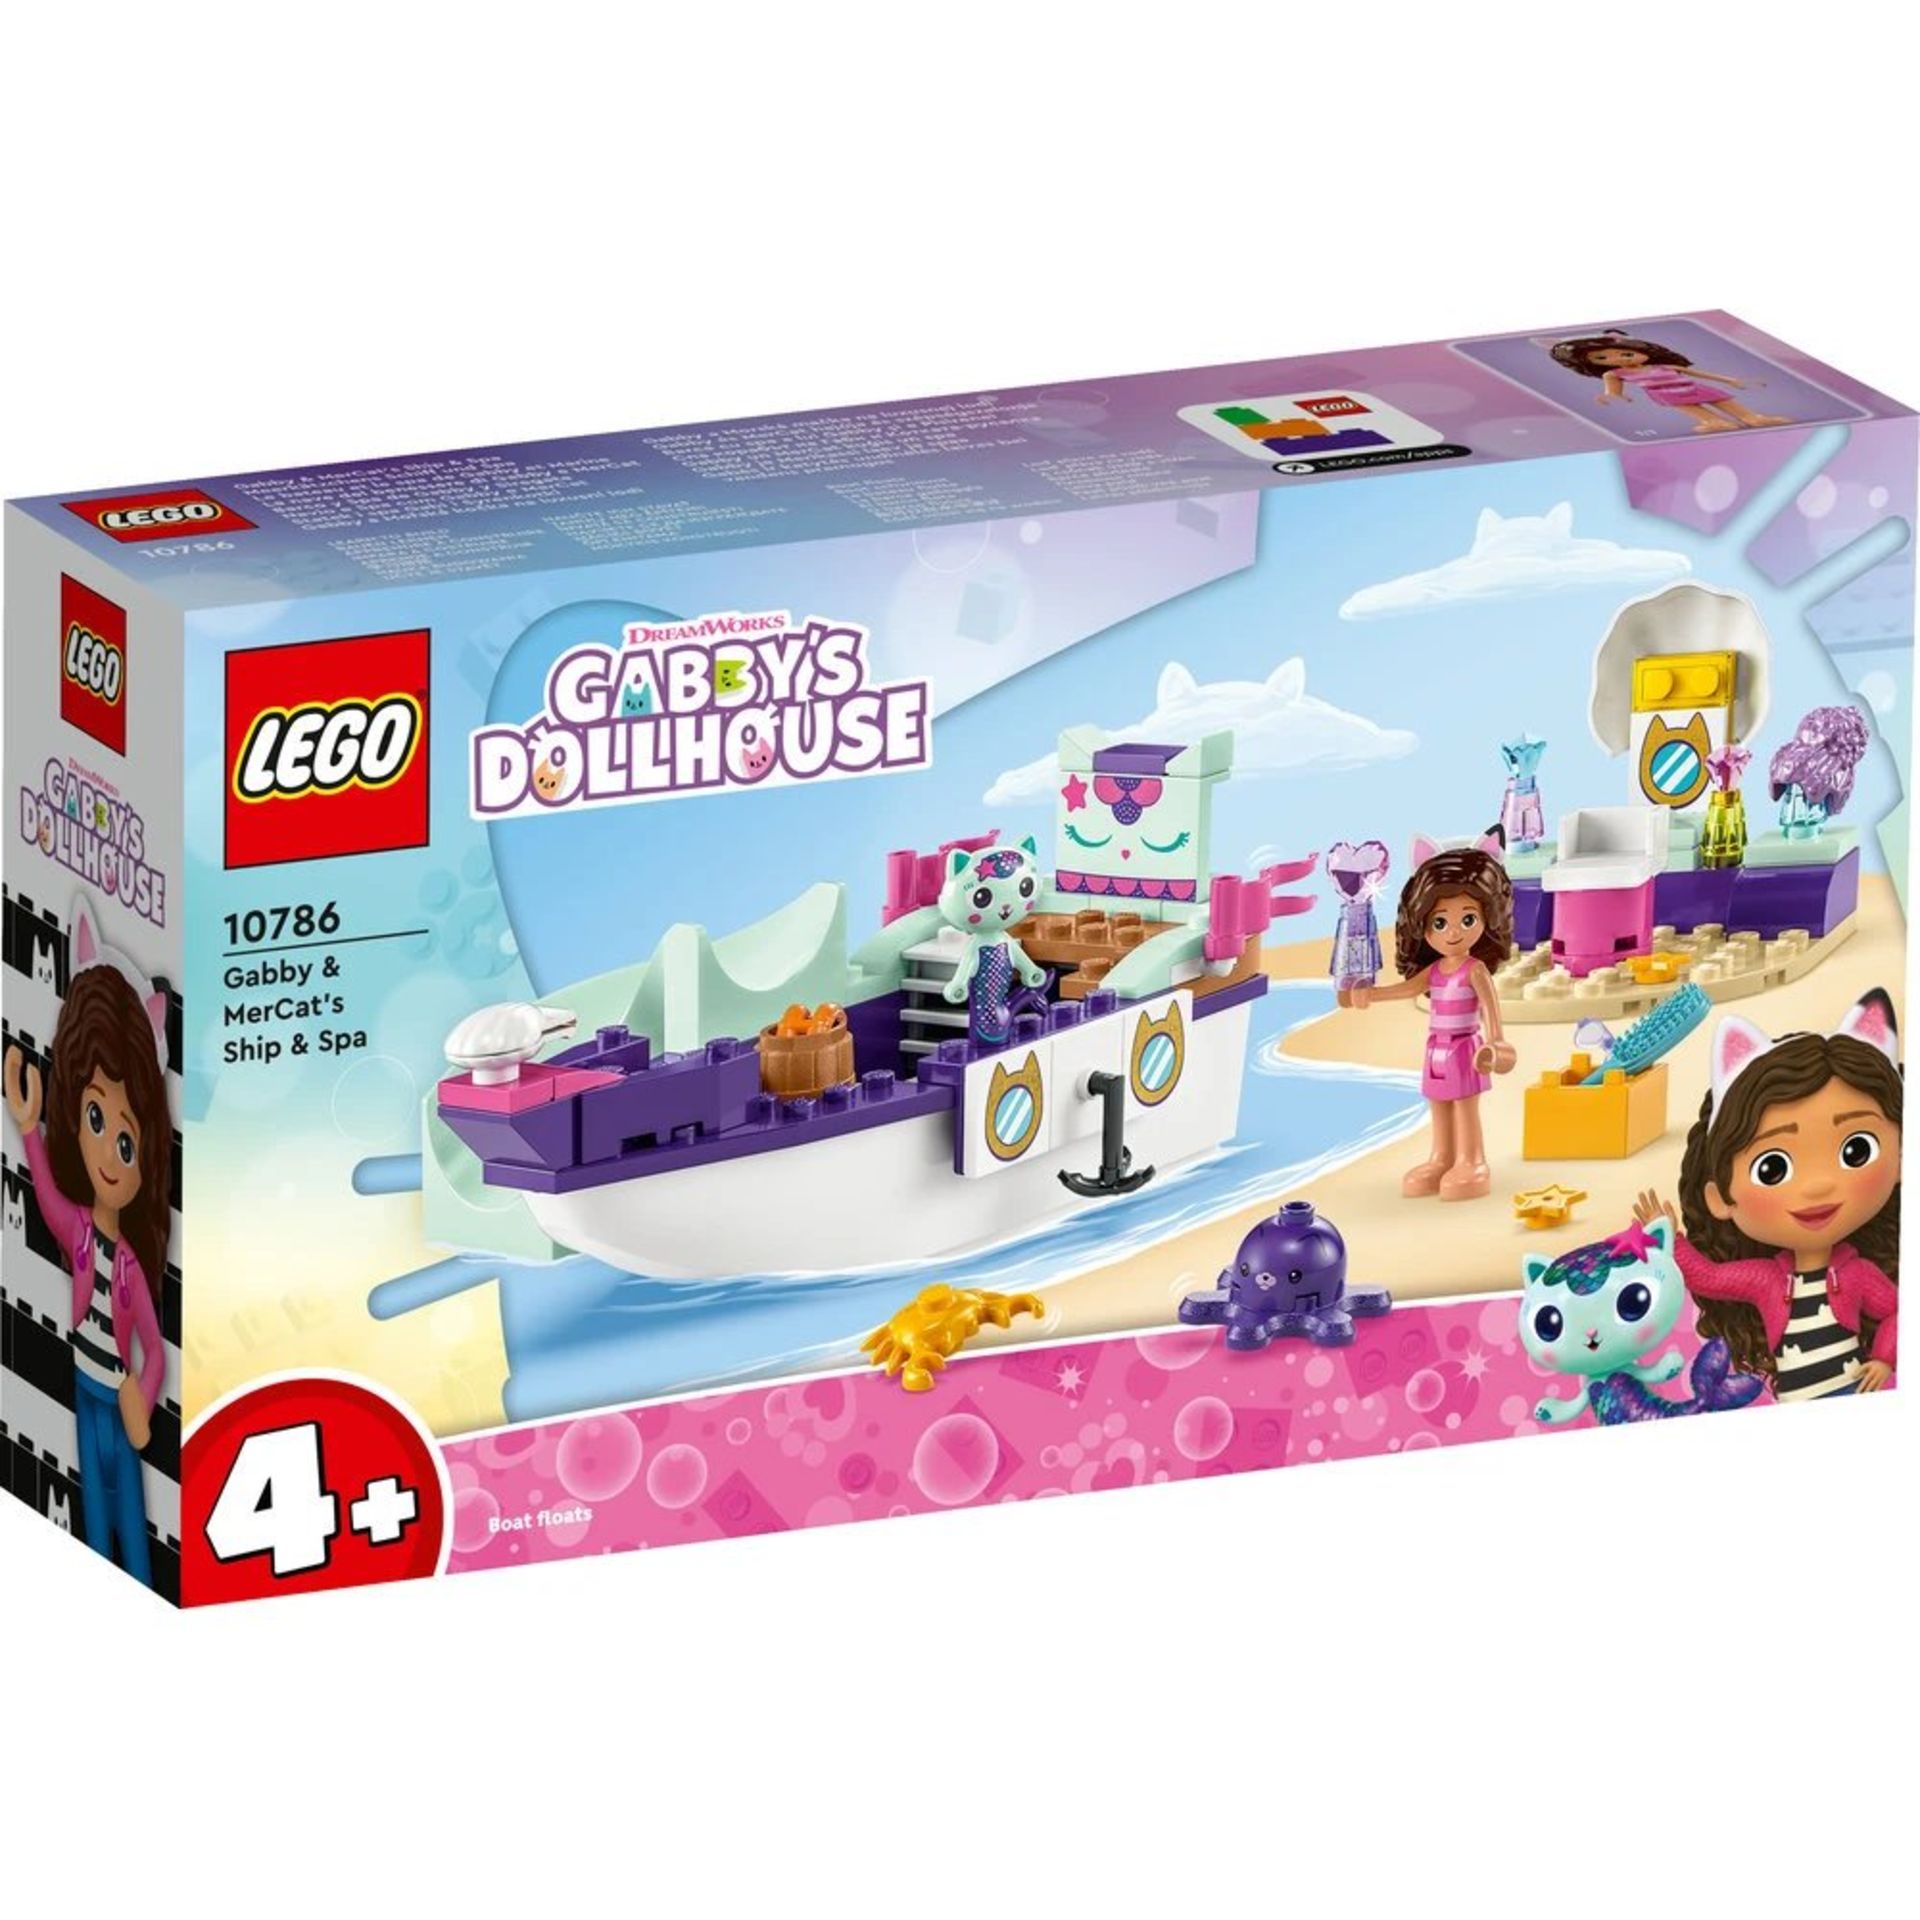 RRP £18.99 - LEGO Gabby’s Dollhouse – Gabby & MerCat’s Ship & Spa 10786 Building Toy Set (88